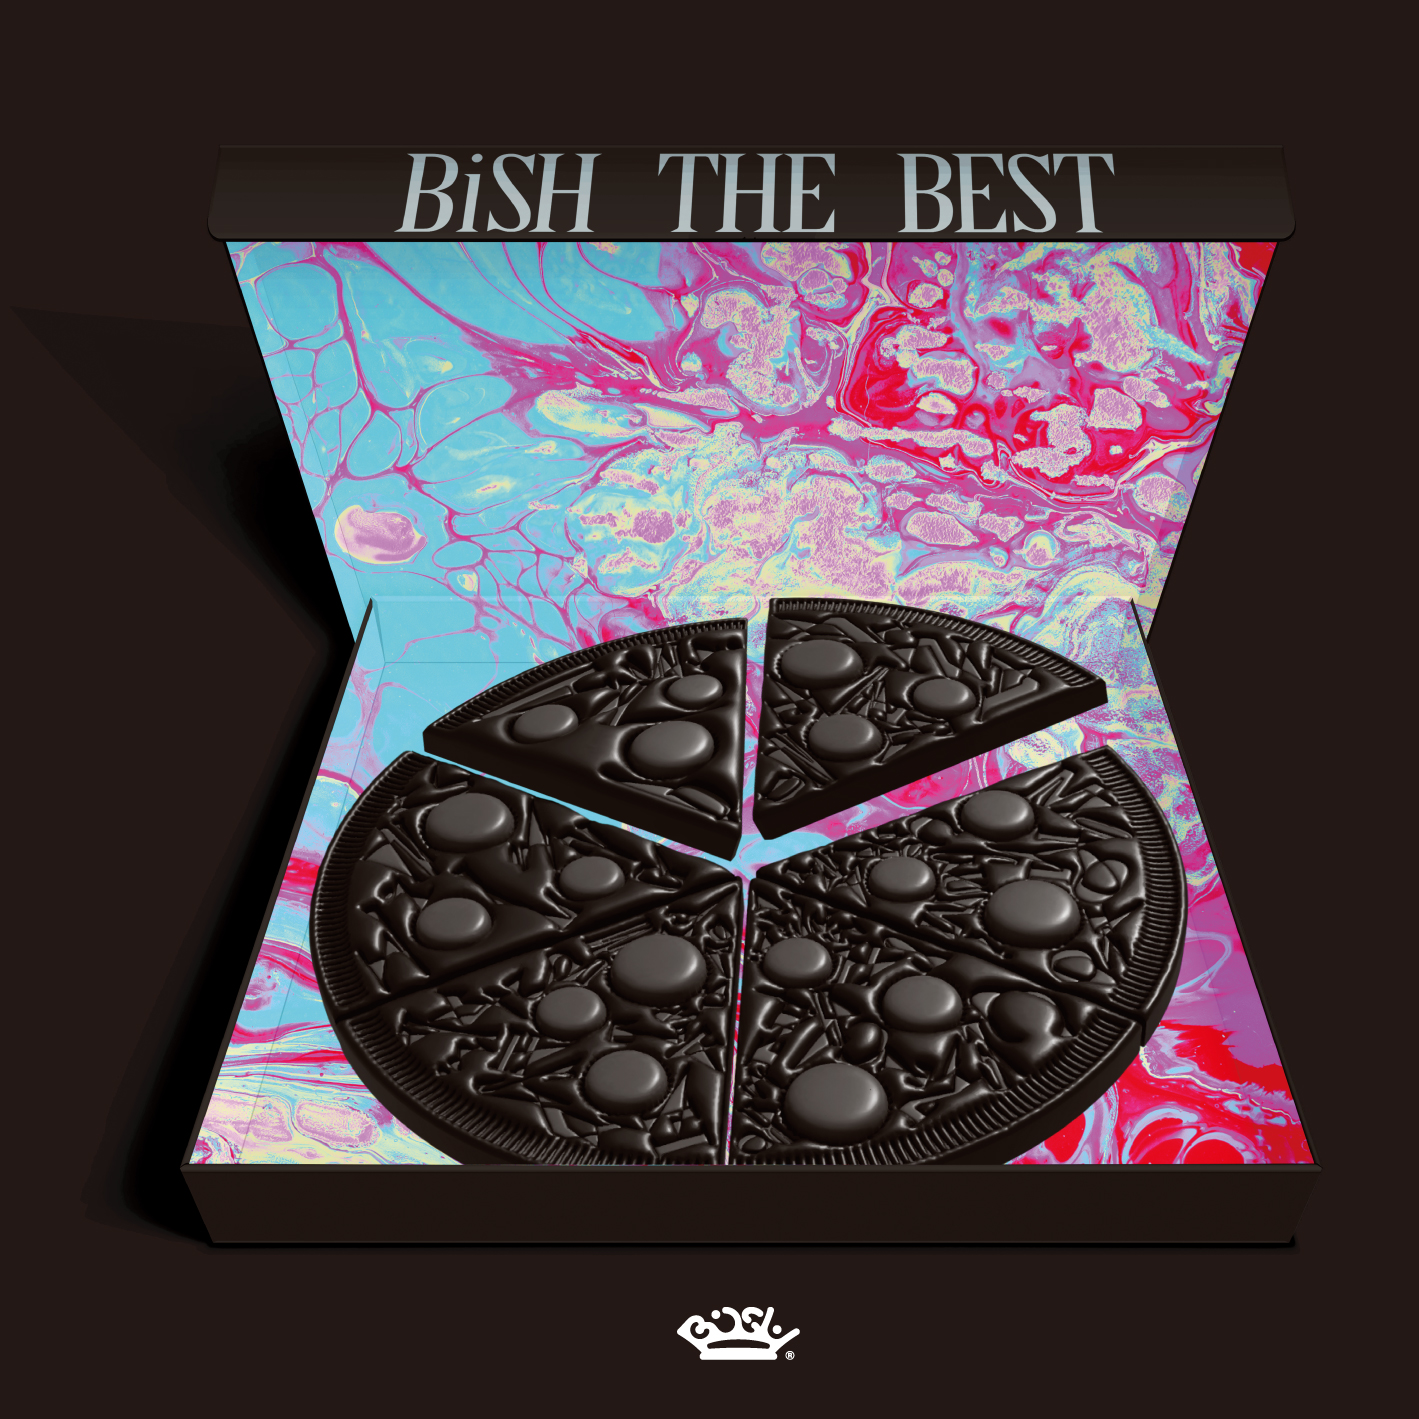 『BiSH THE BEST』CD盤ジャケット